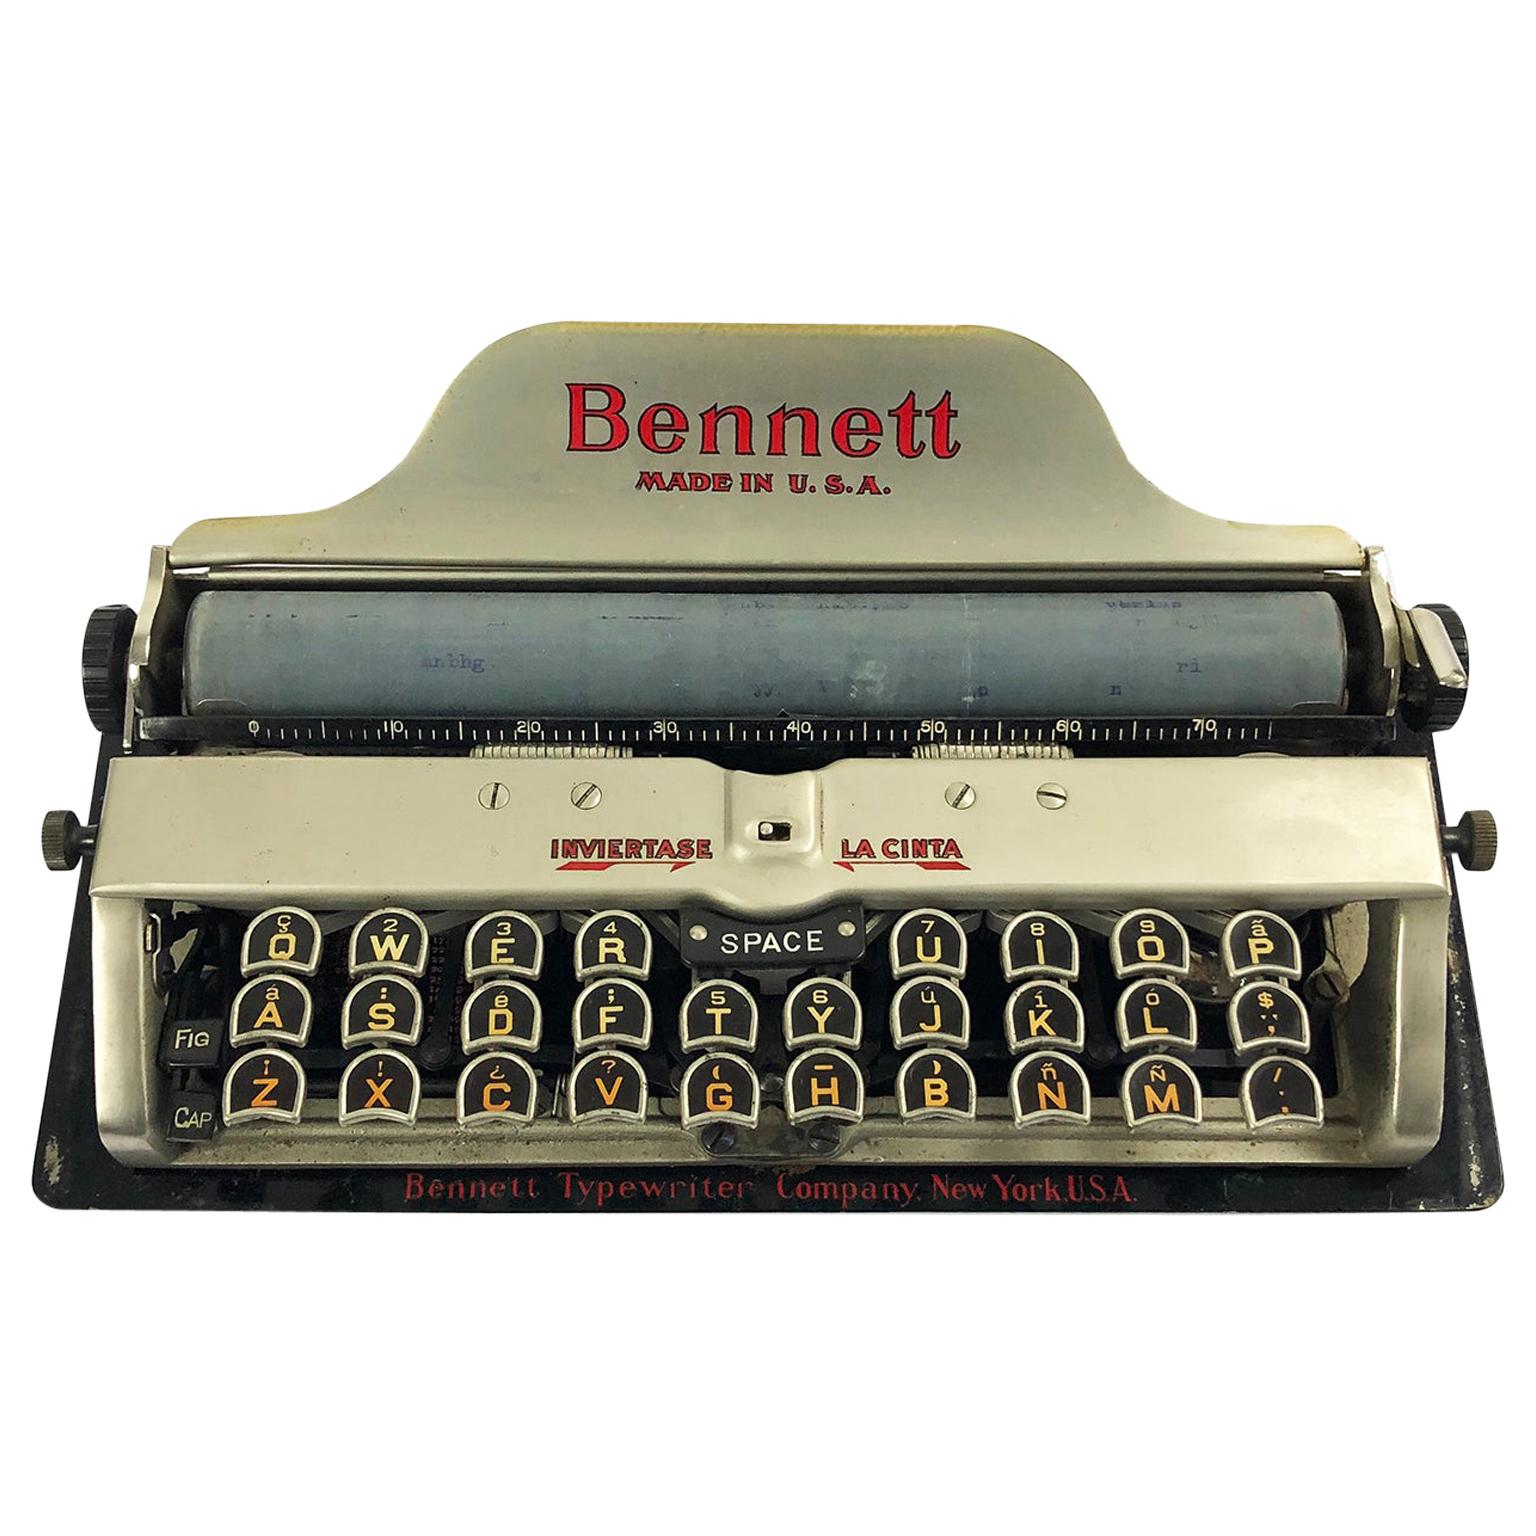 Typewriter by Bennett Company, New York, USA